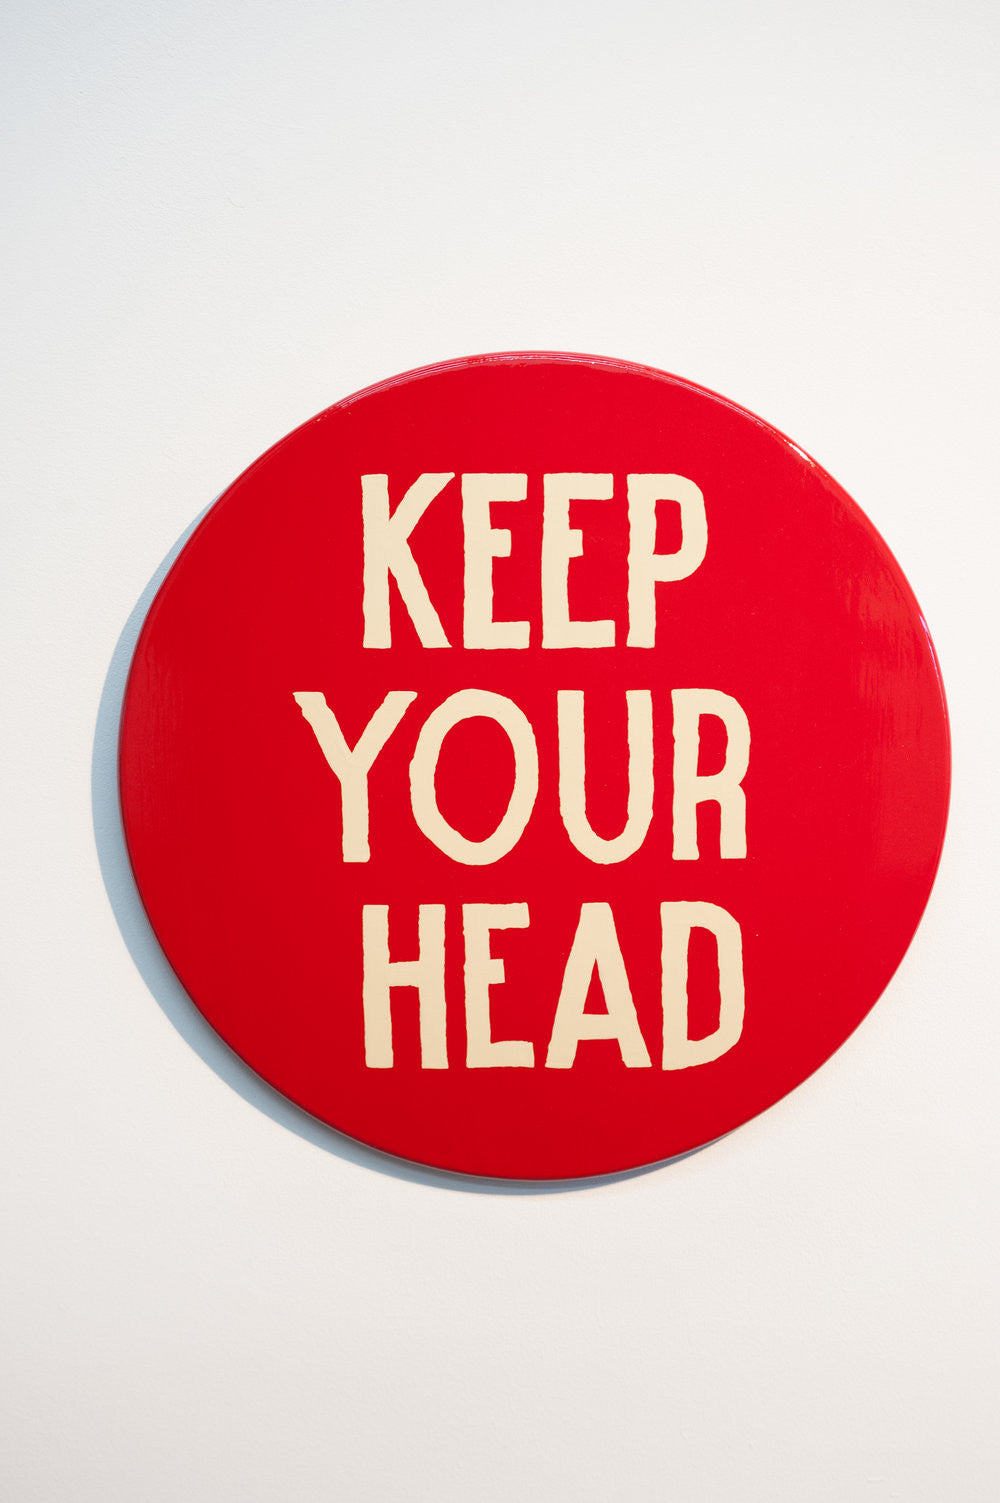 Jim Christensen, "Keep Your Head"